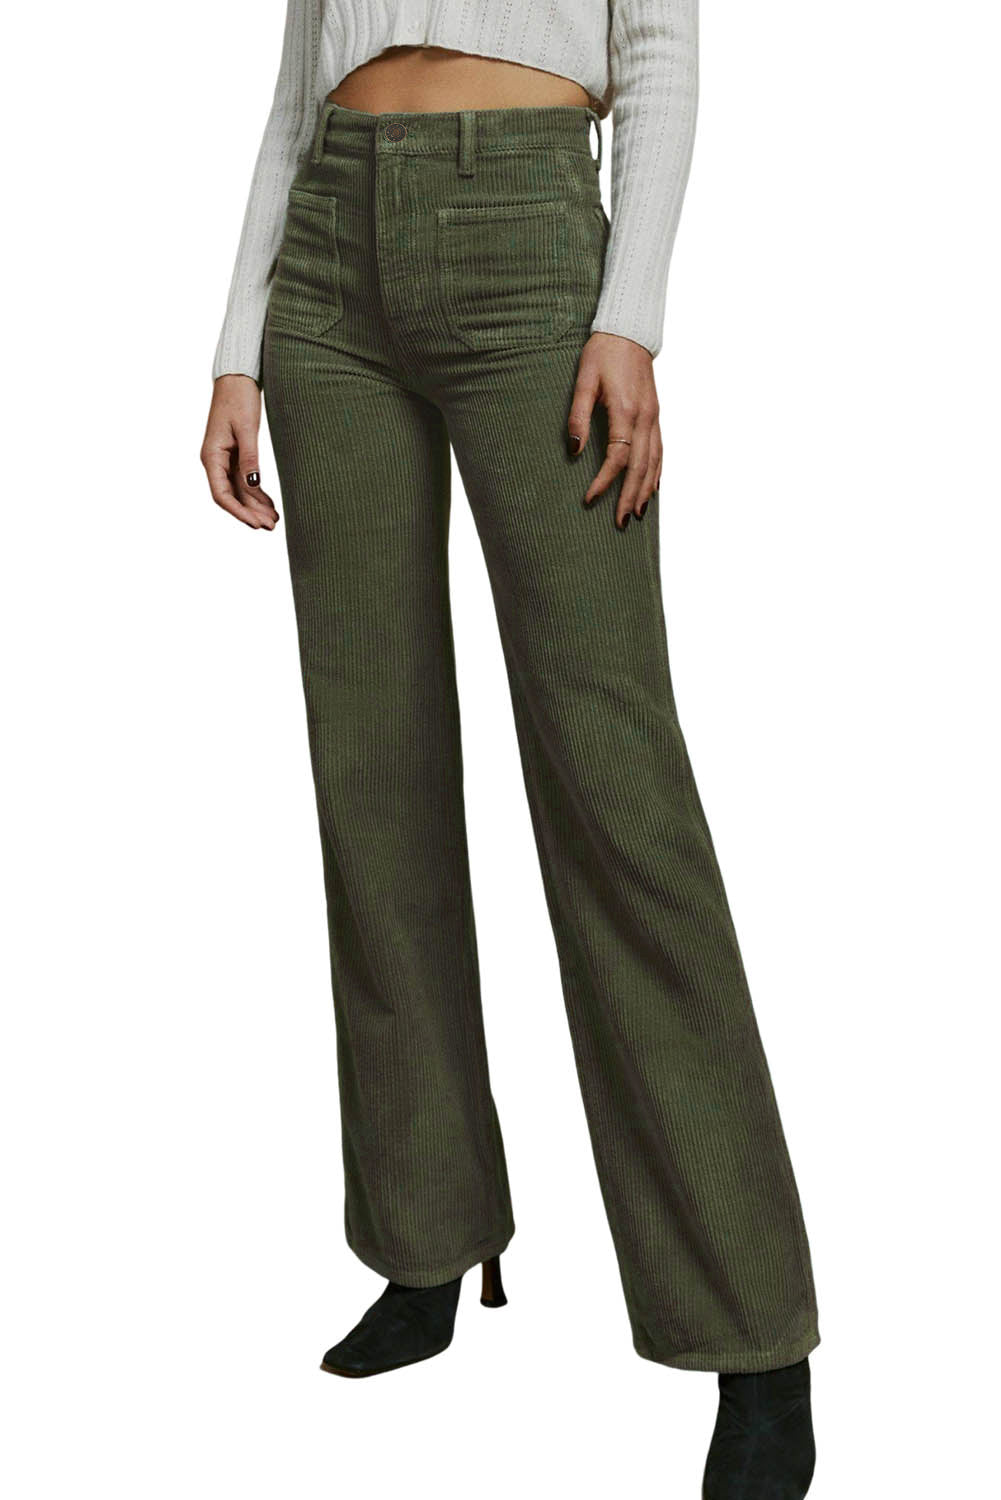 Green High Waist Square Pockets Corduroy Womens Pants - US2EInc Apparel Plug Ltd. Co